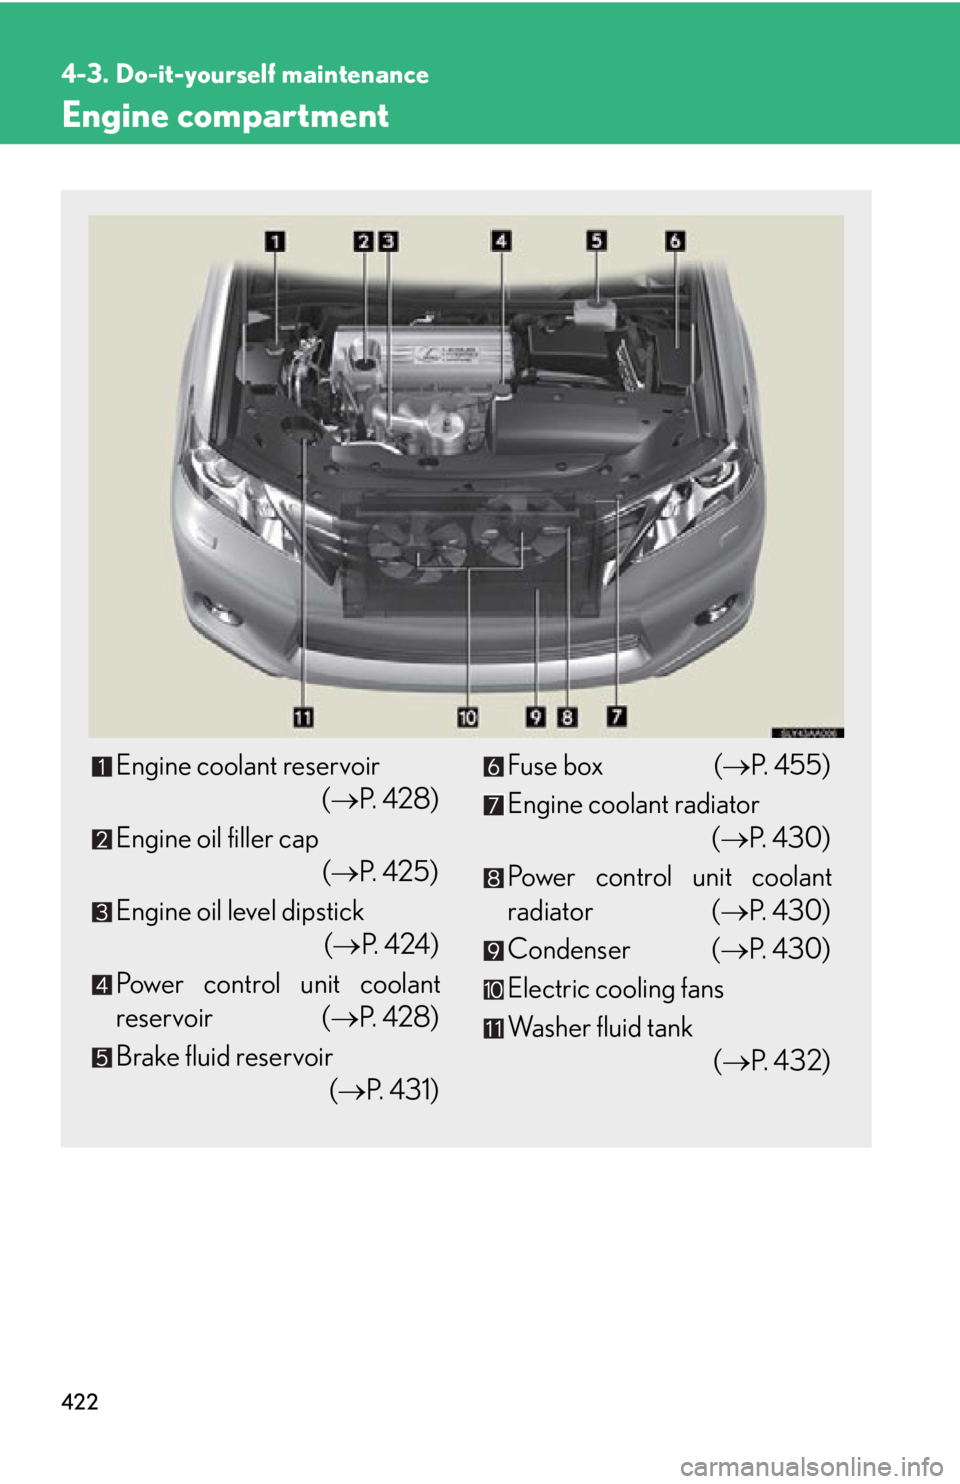 Lexus HS250h 2010  Hybrid System / LEXUS 2010 HS250H OWNERS MANUAL (OM75006U) 422
4-3. Do-it-yourself maintenance
Engine compartment
Engine coolant reservoir 
( P.  4 2 8 )
Engine oil filler cap 
( P. 425)
Engine oil level dipstick  
( P.  4 2 4 )
Power contro